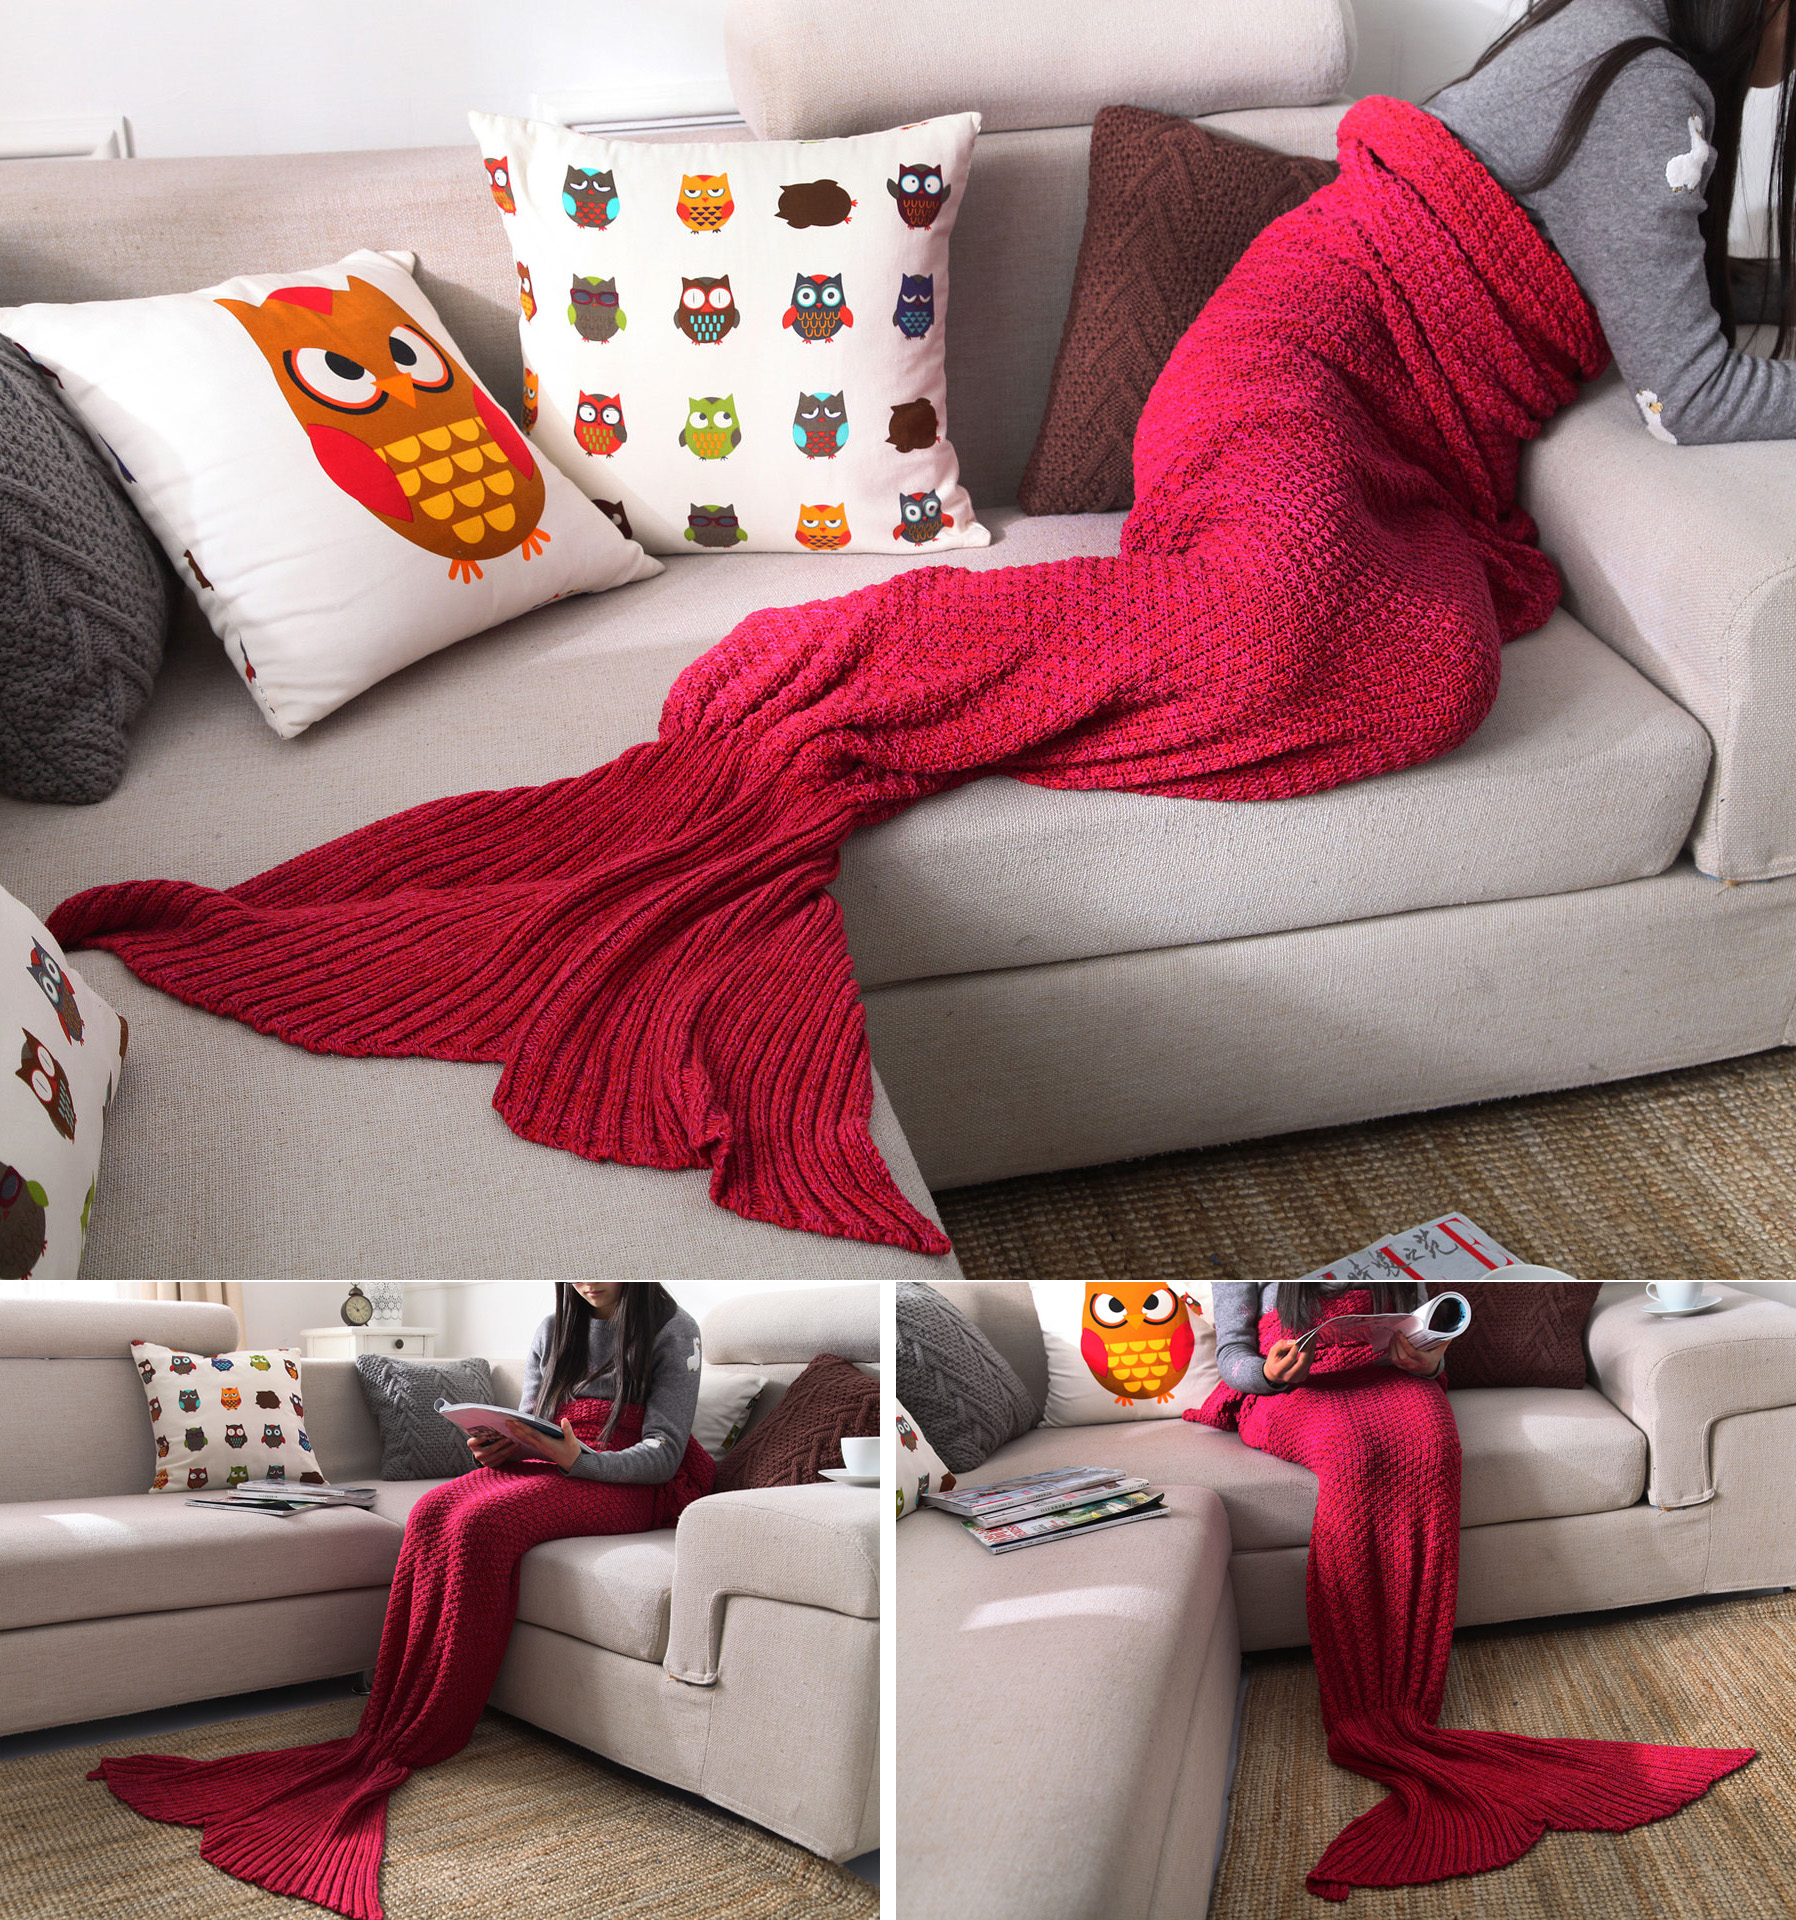 Yarn-Knitted-Mermaid-Tail-Blanket-Handmade-Crochet-Throw-Super-Soft-Sofa-Bed-Mat-Sleeping-Bag-1083119-6